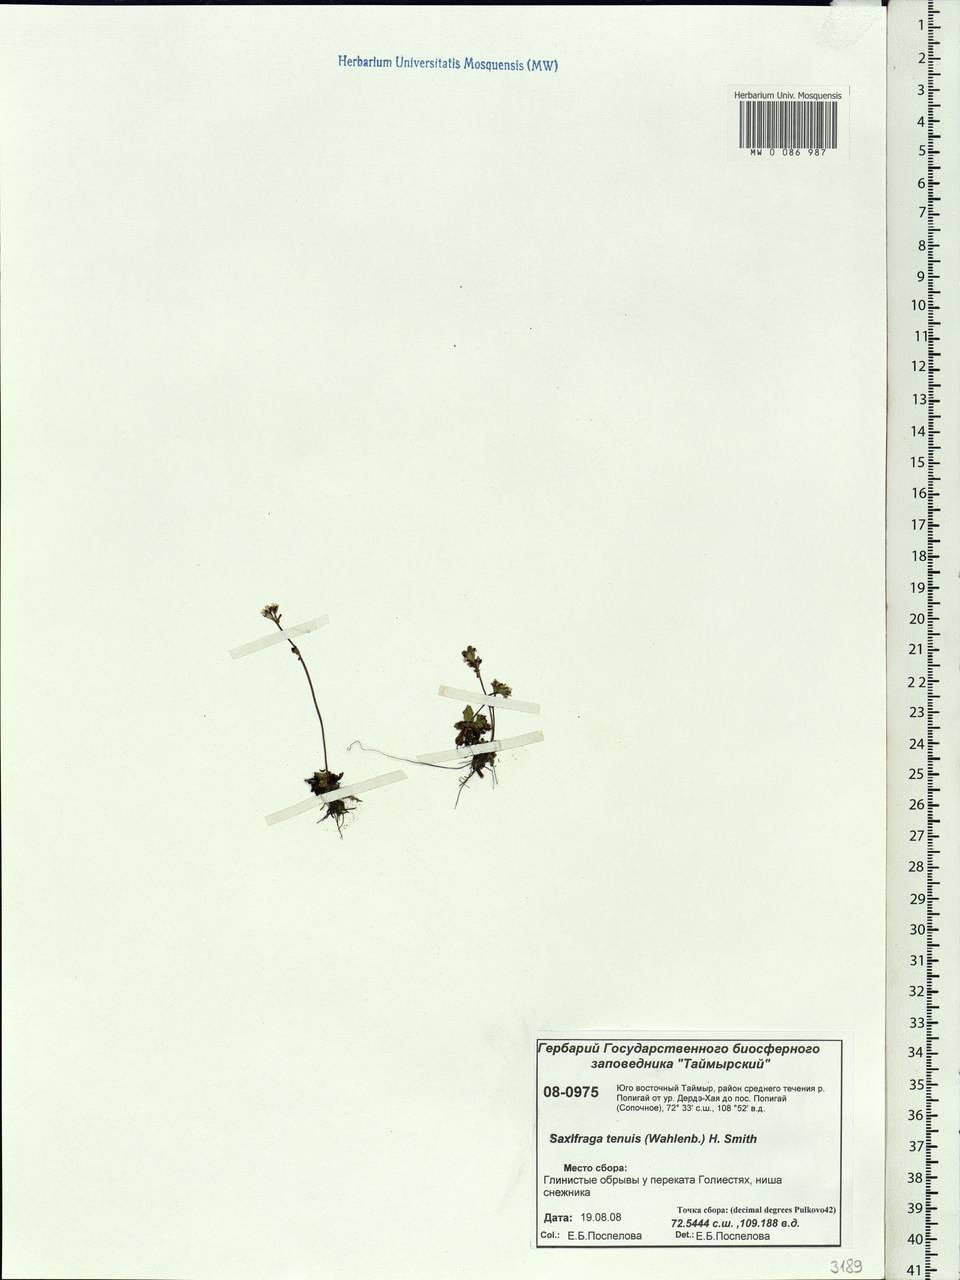 Micranthes tenuis (Wahlenb.) Small, Siberia, Central Siberia (S3) (Russia)